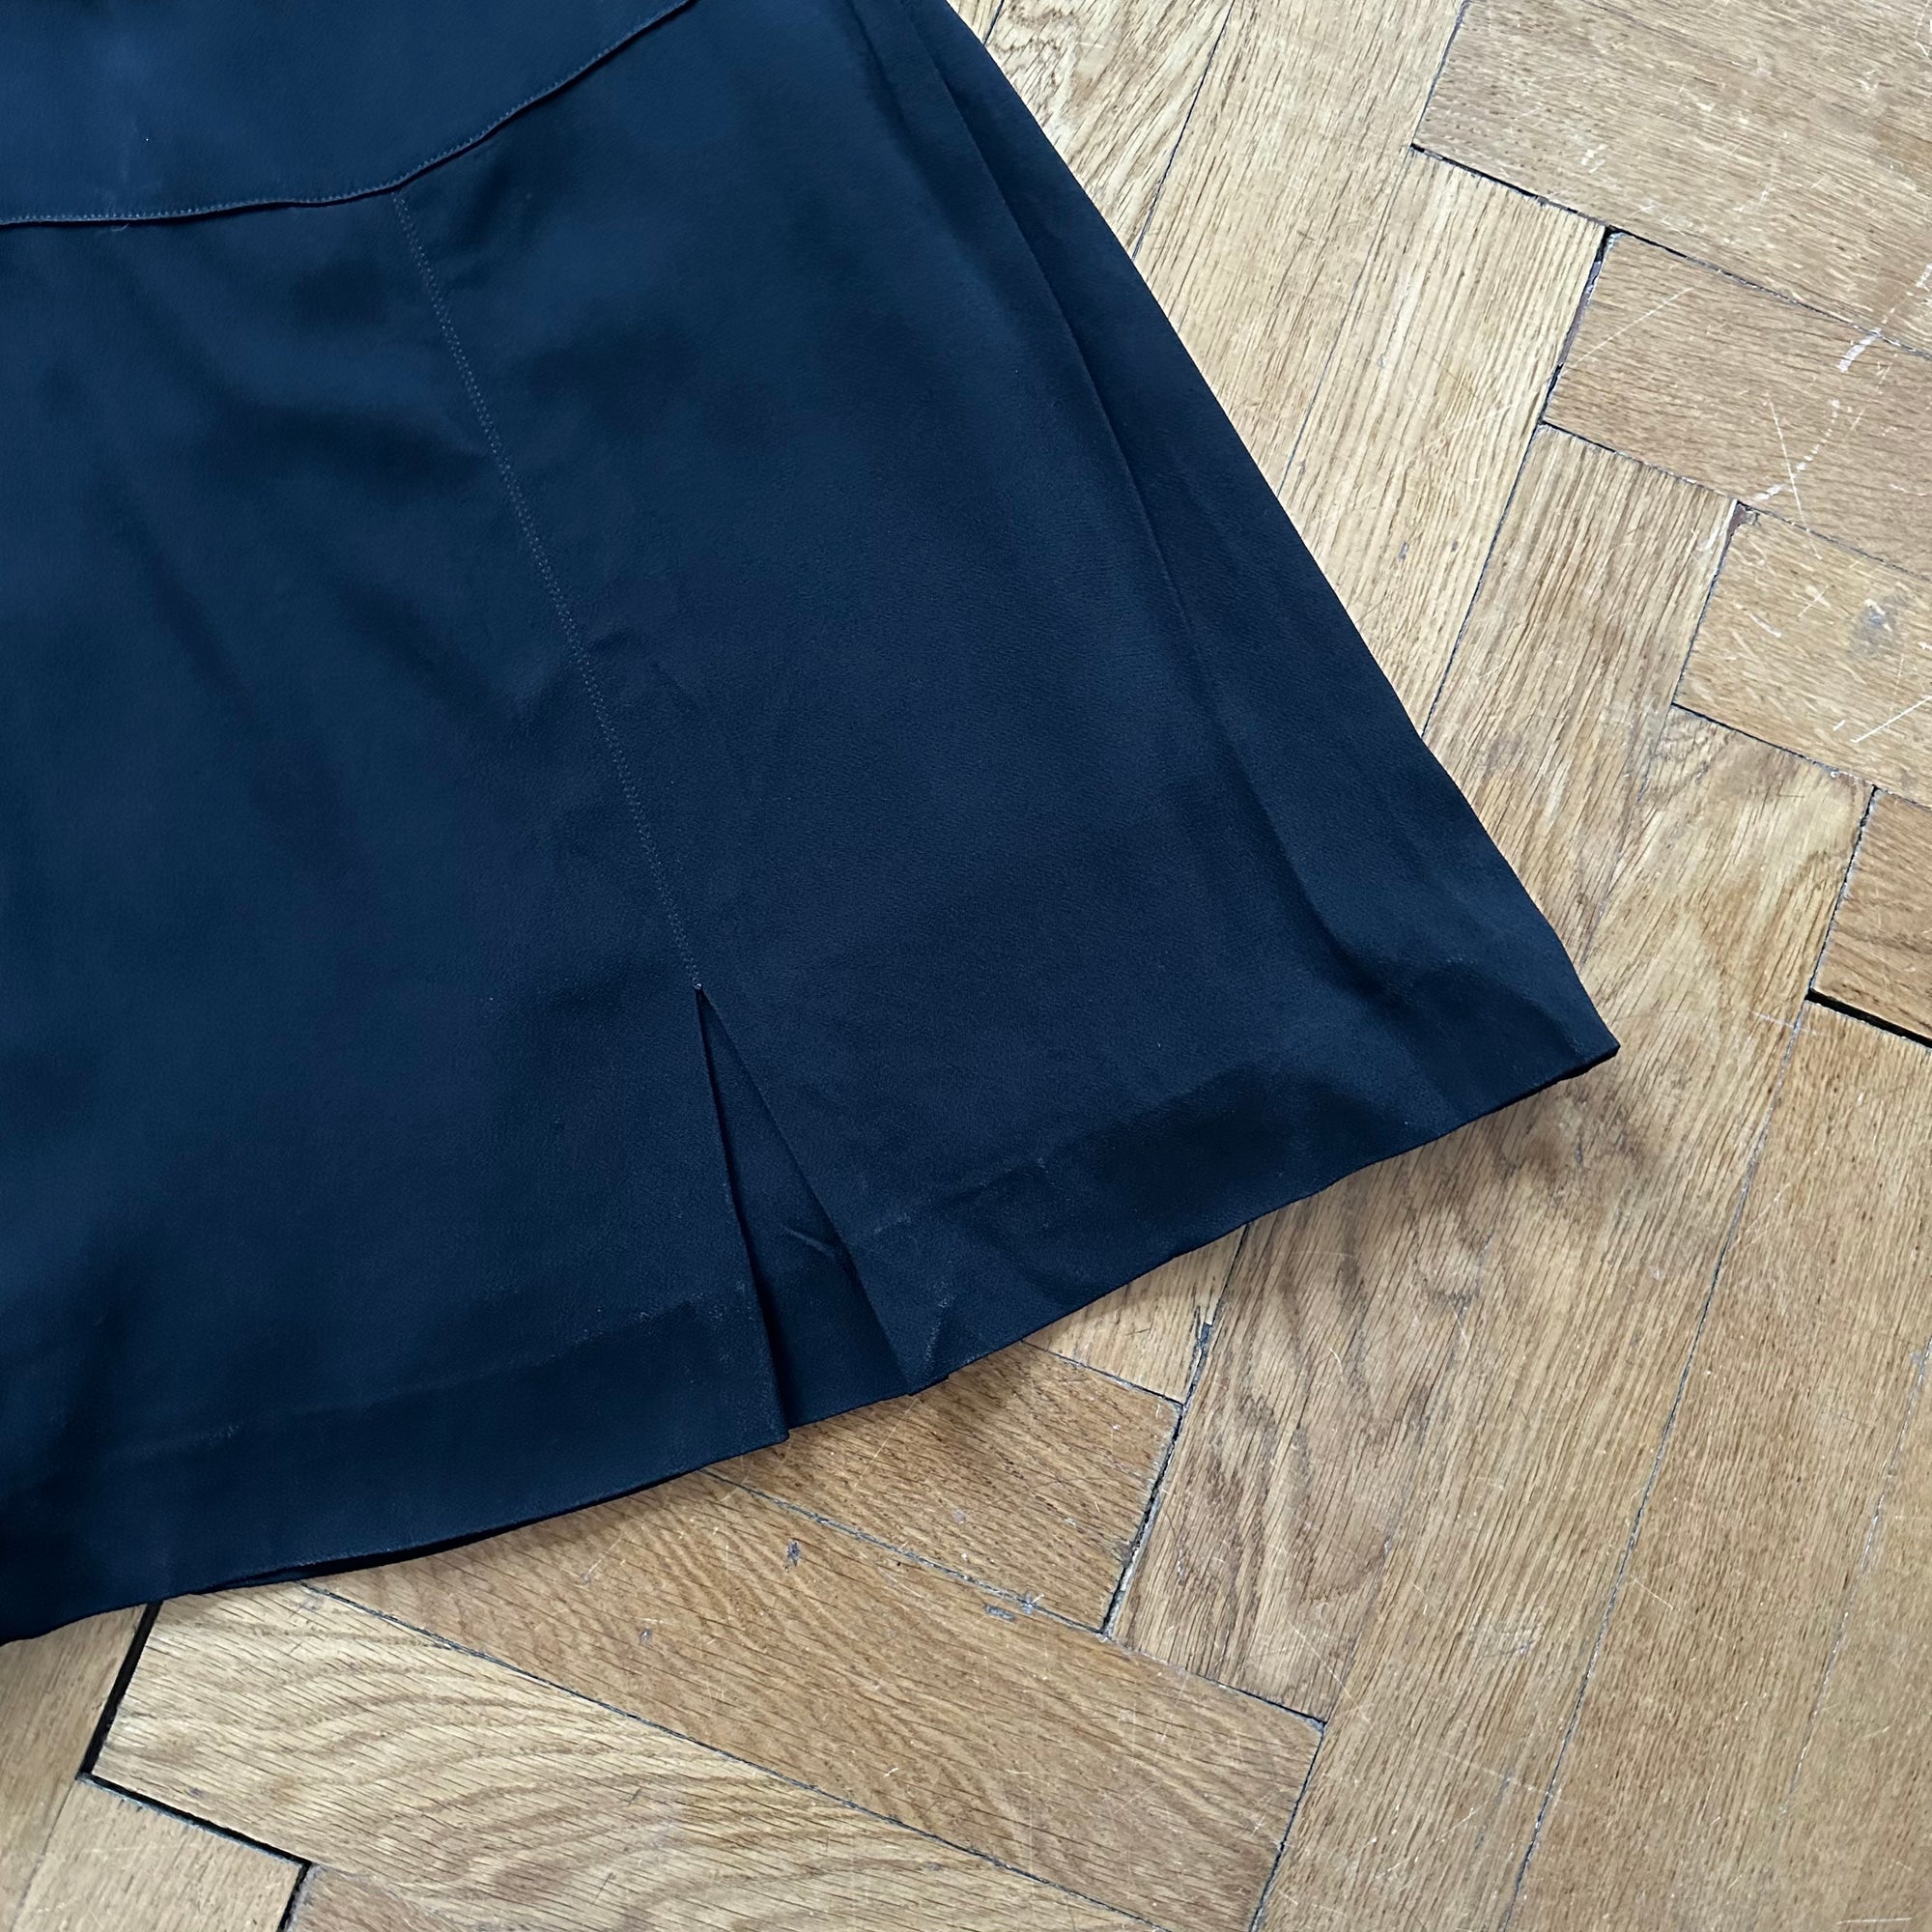 Maison Martin Margiela AW94 Reproduction Custom Made Suit Skirt